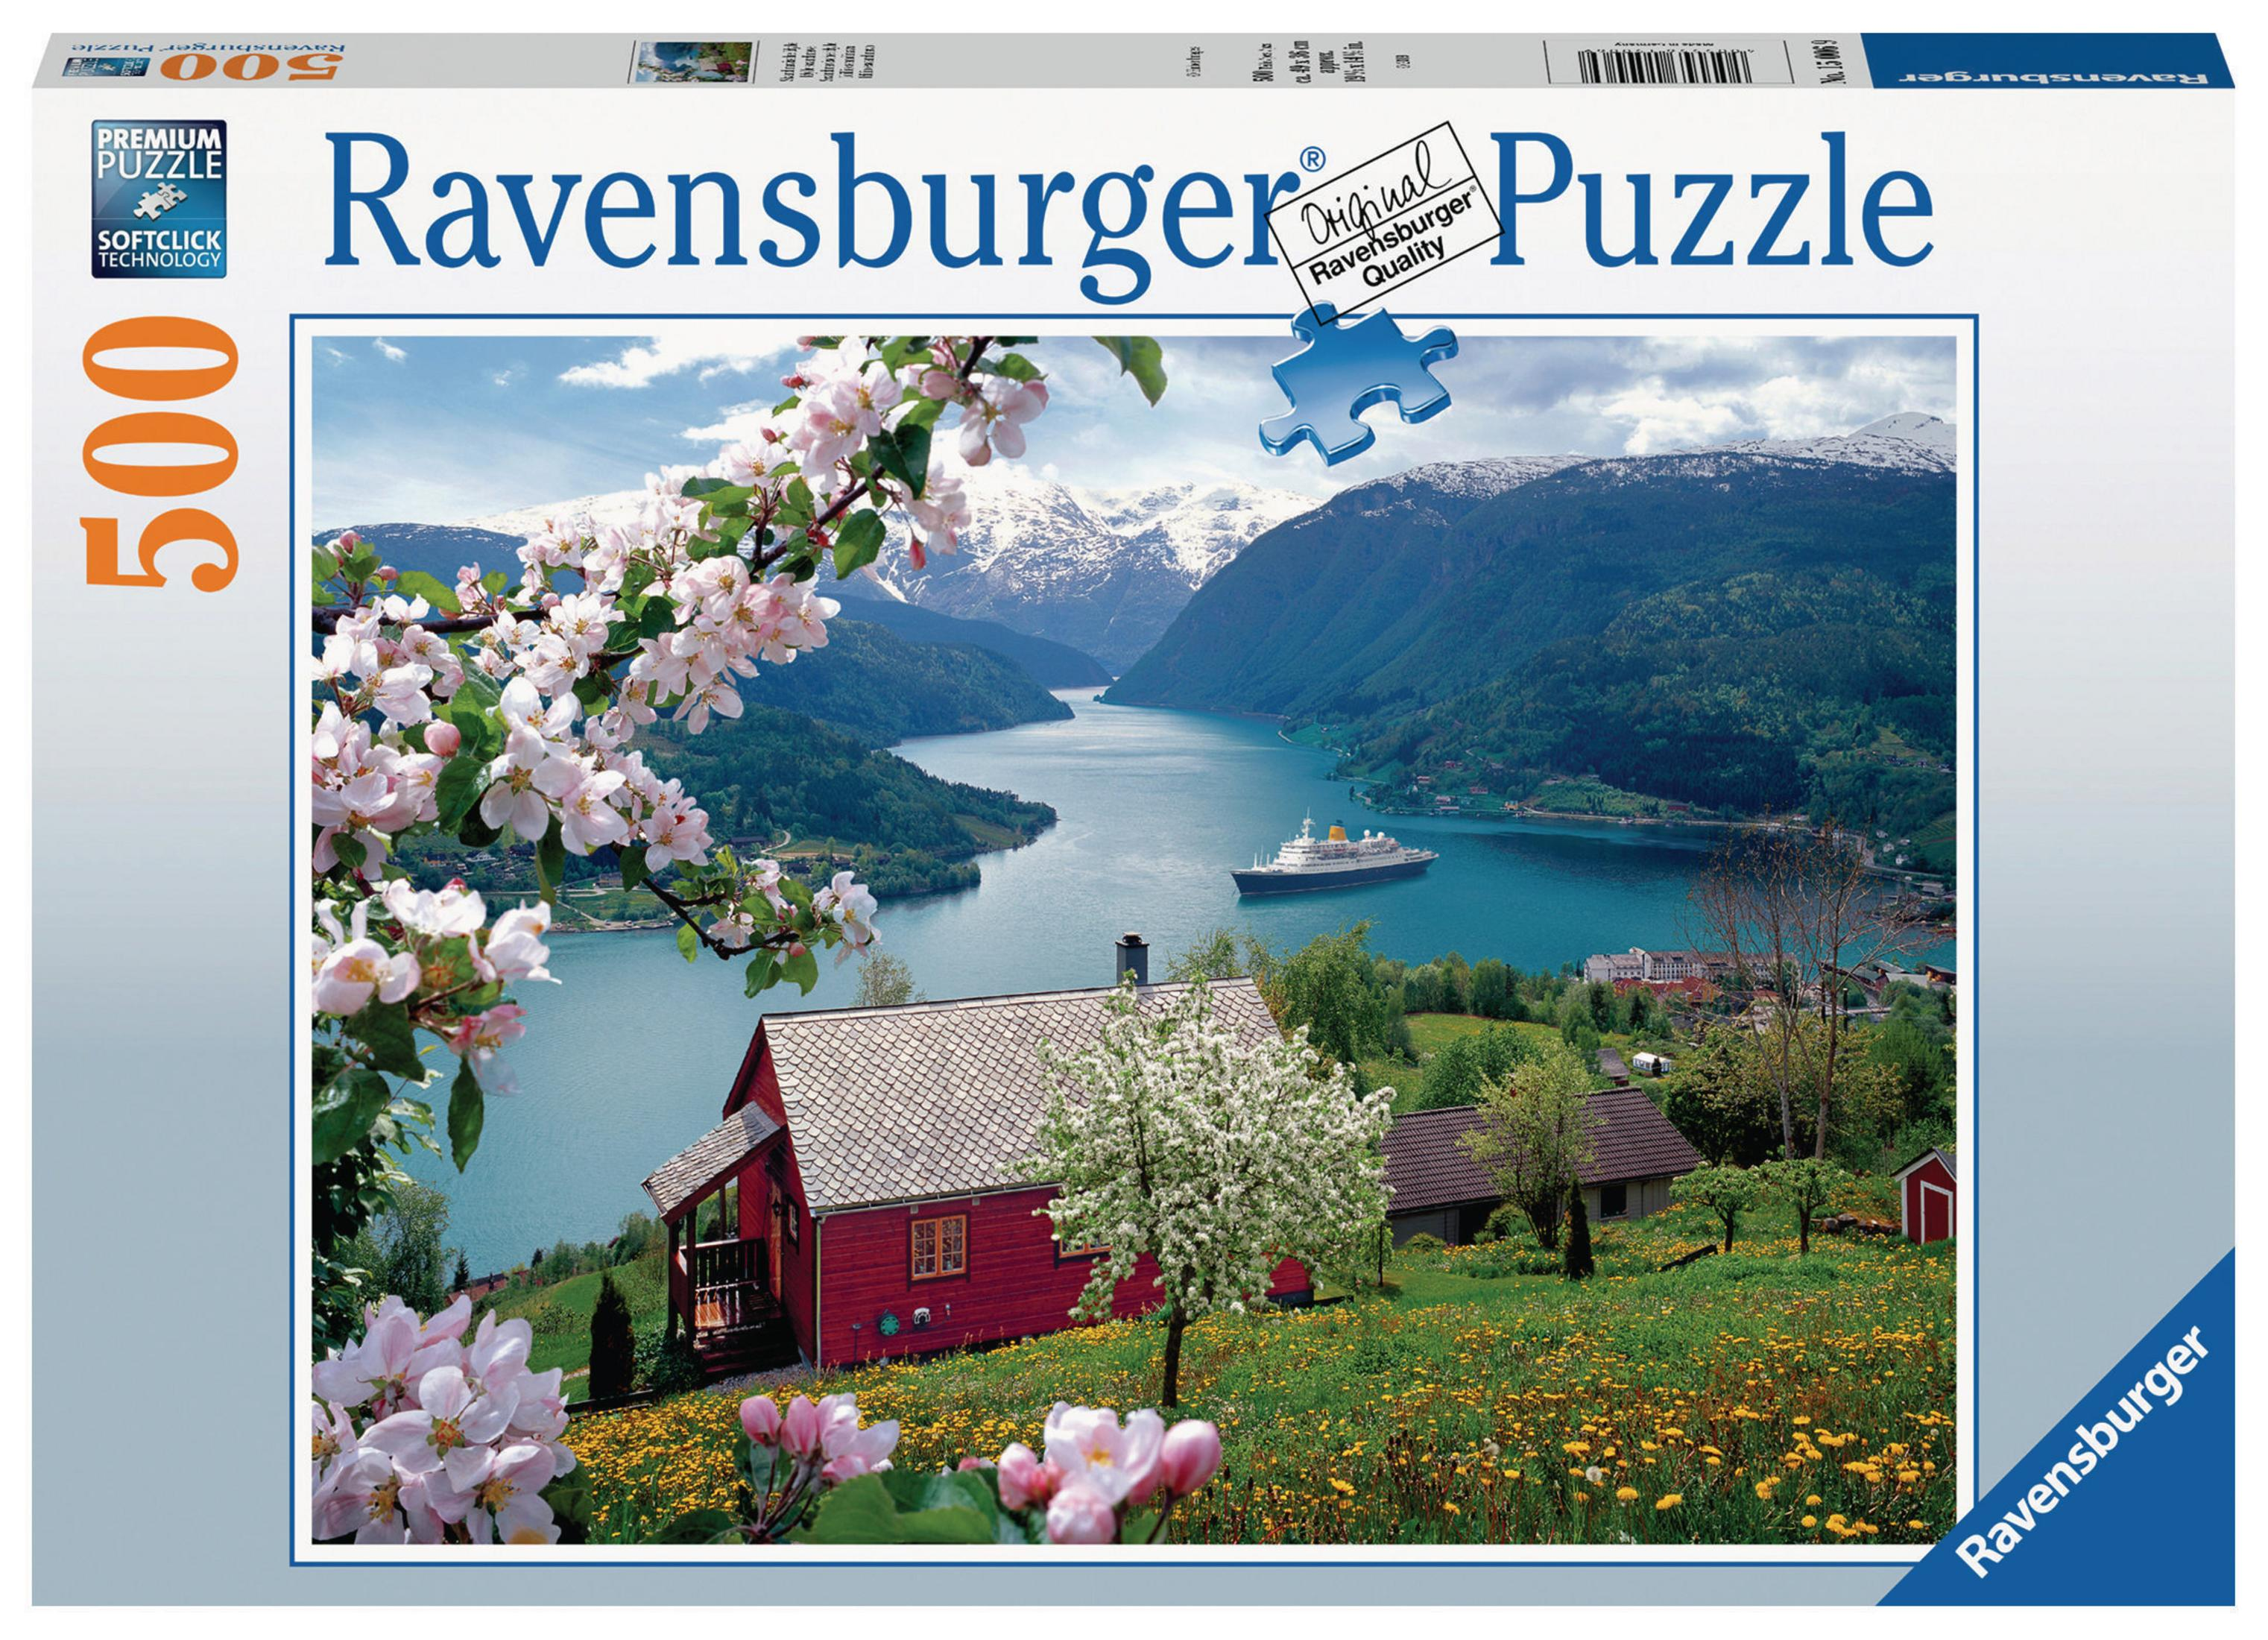 SKANDINAVISCHE RAVENSBURGER IDYLLE 15006 Puzzle